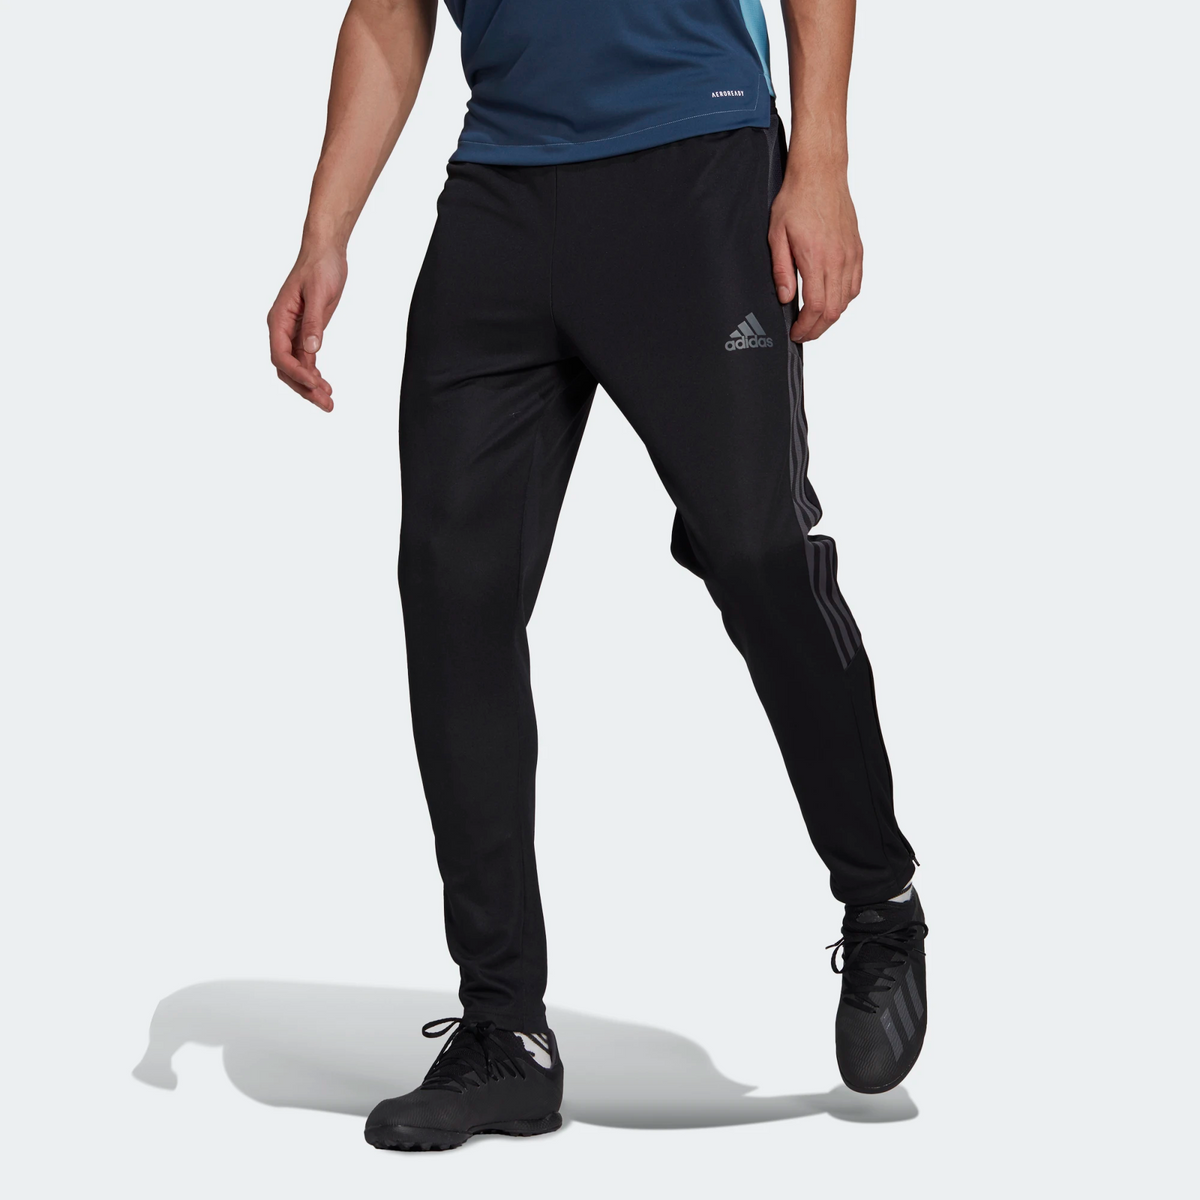 convergentie Renderen emulsie Adidas Men's Tiro Track Pants - Black / Dgh Solid Grey — Just For Sports